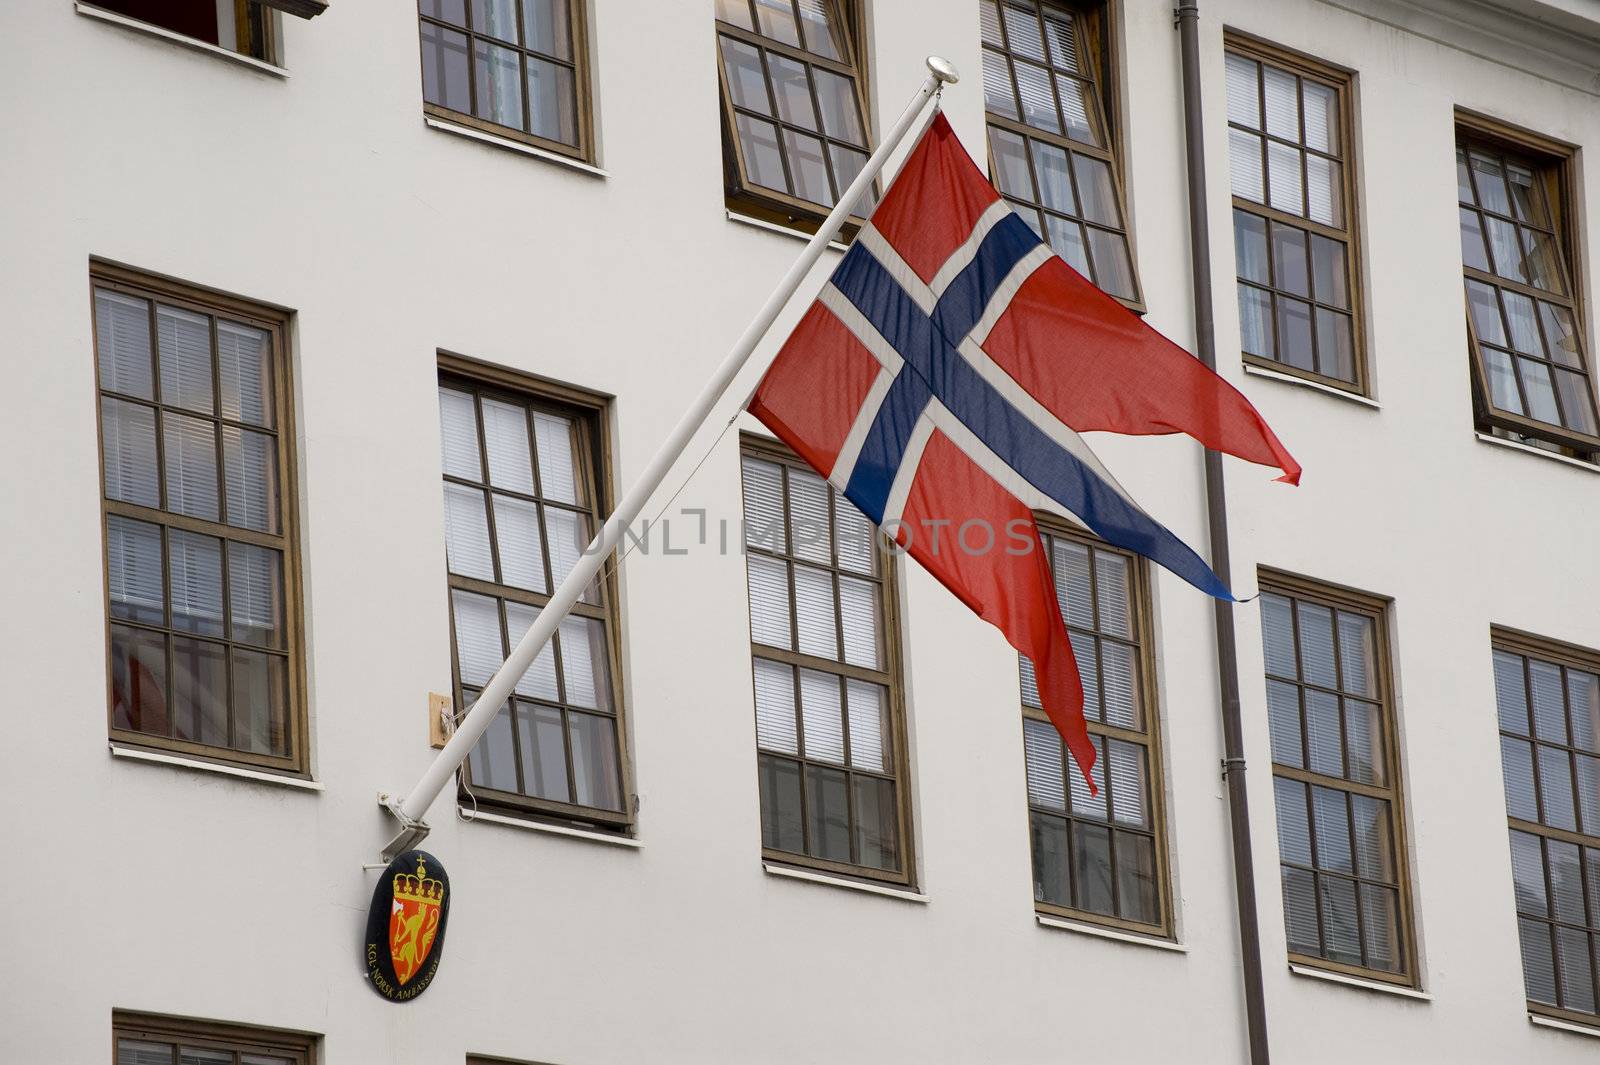 Norwegian flag by Alenmax